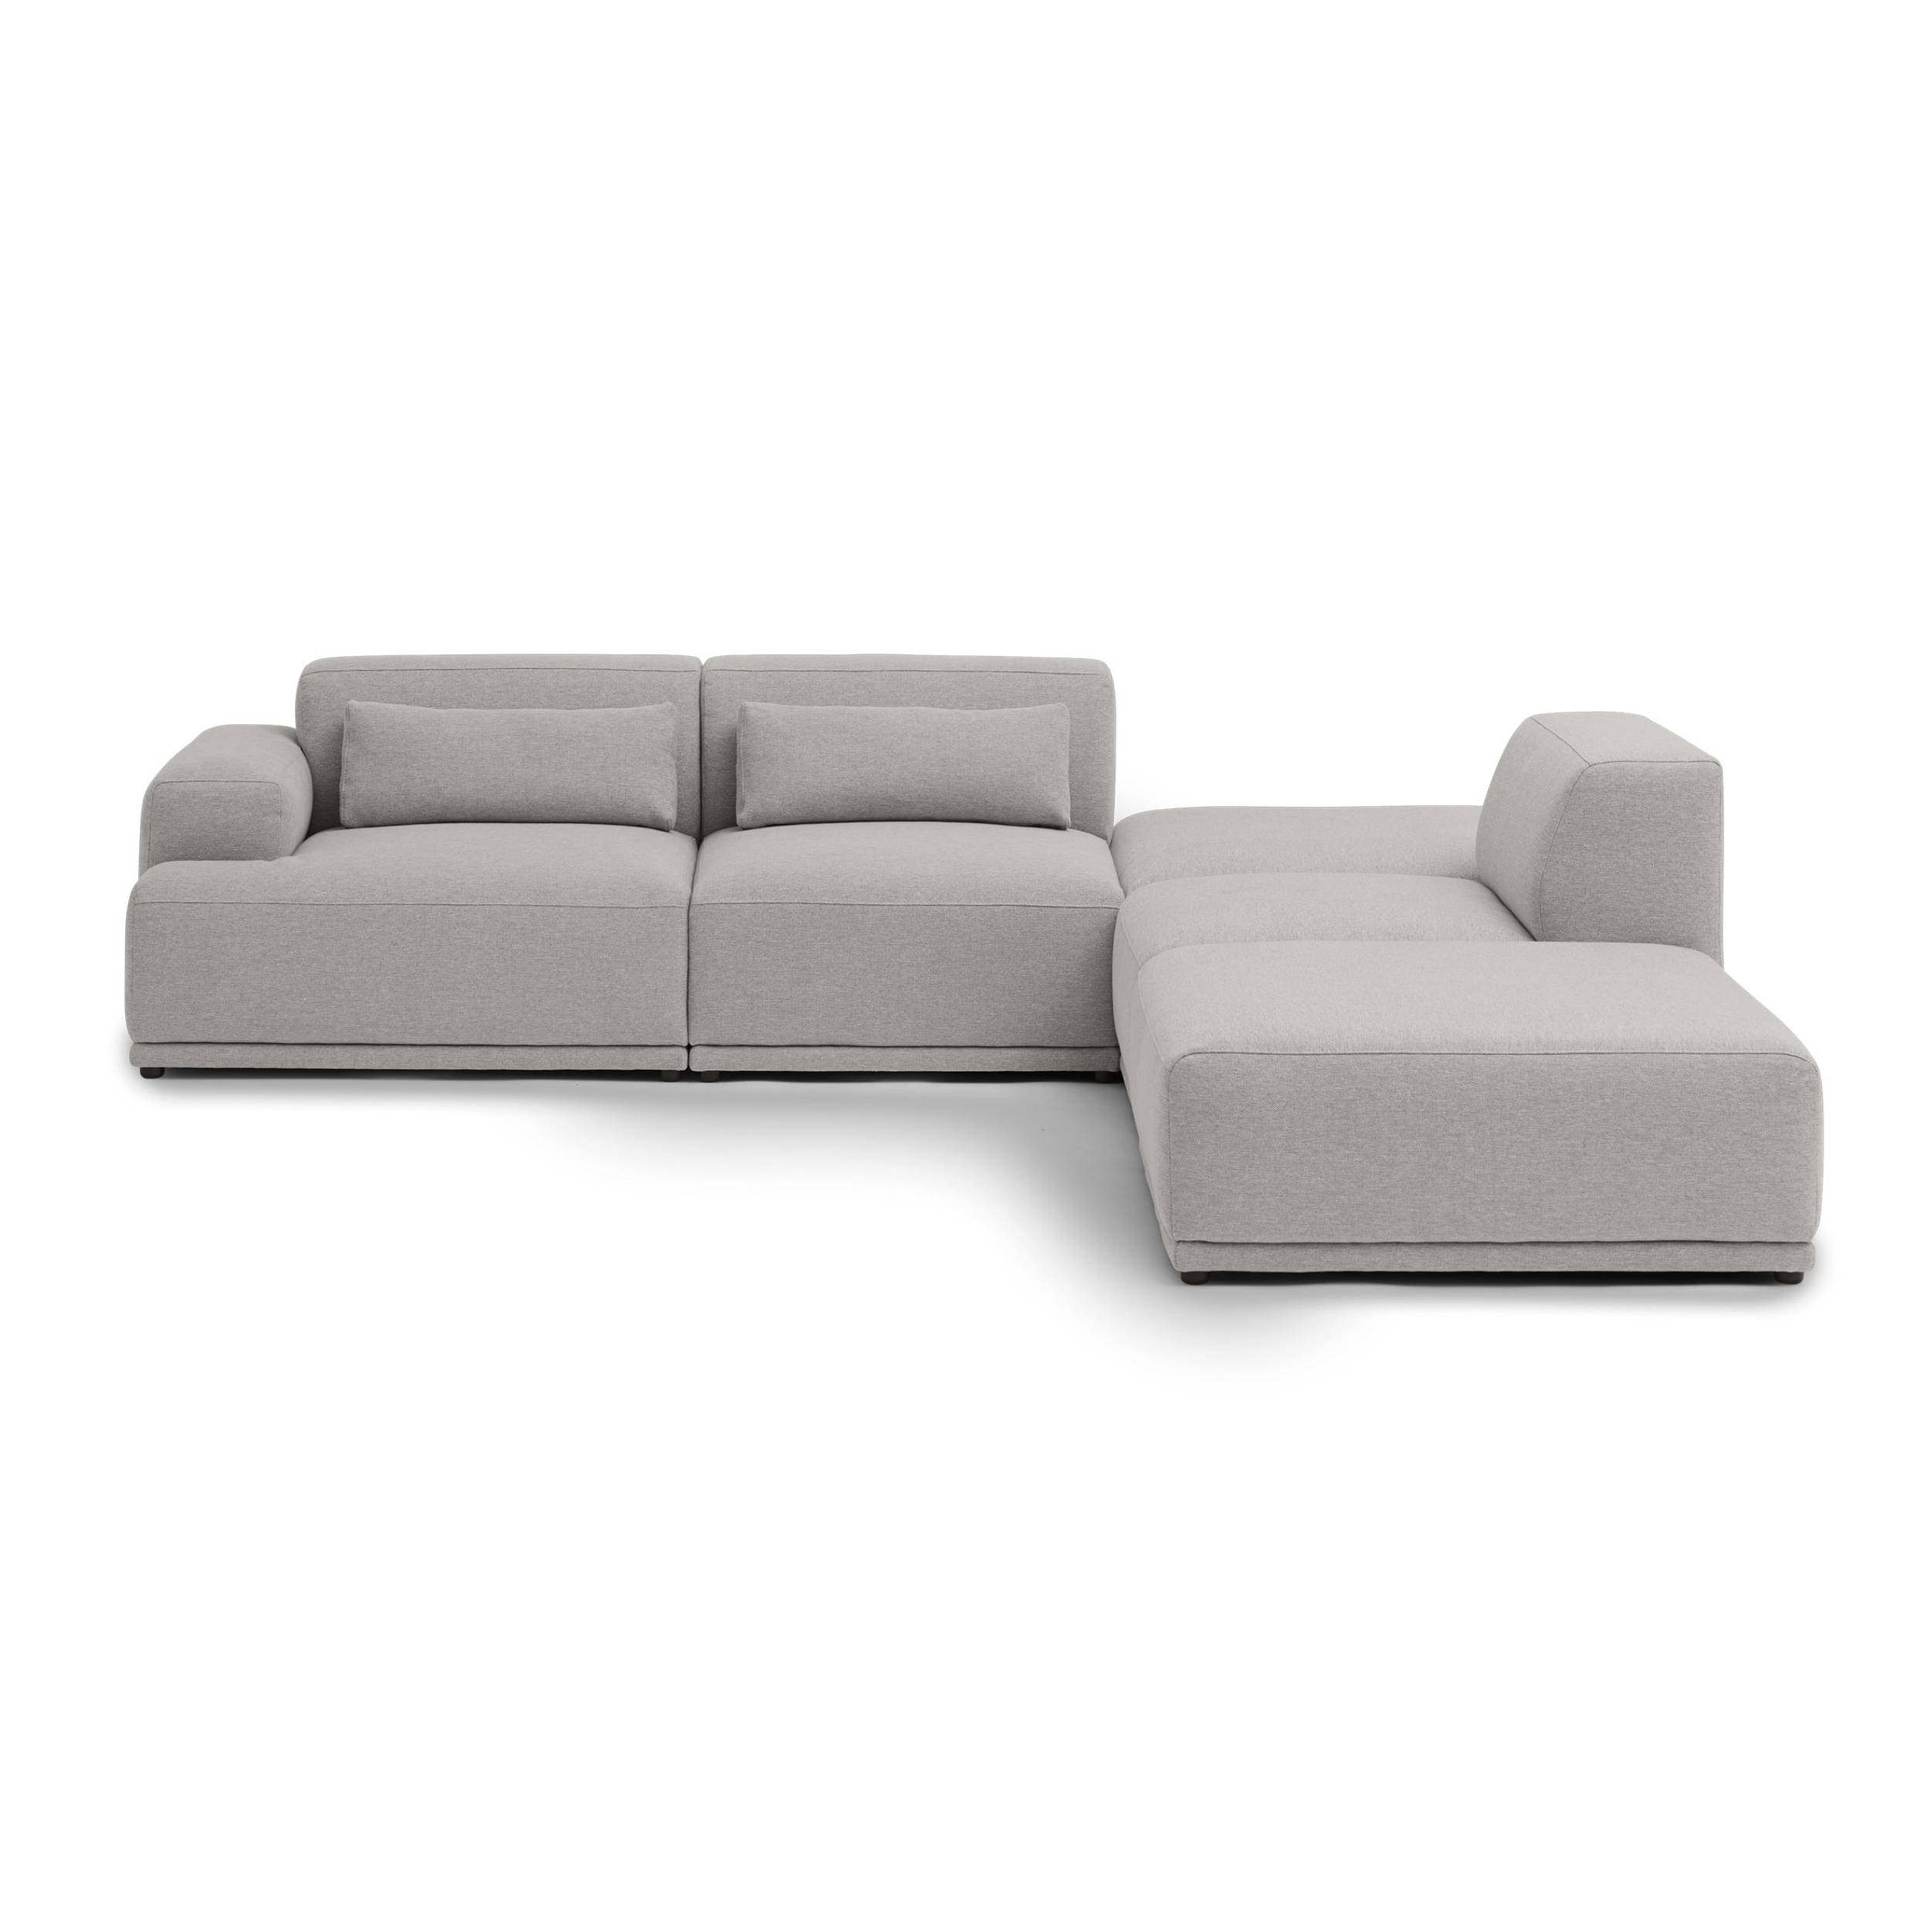 Connect Soft Modular Sofa: Corner - Quick Ship